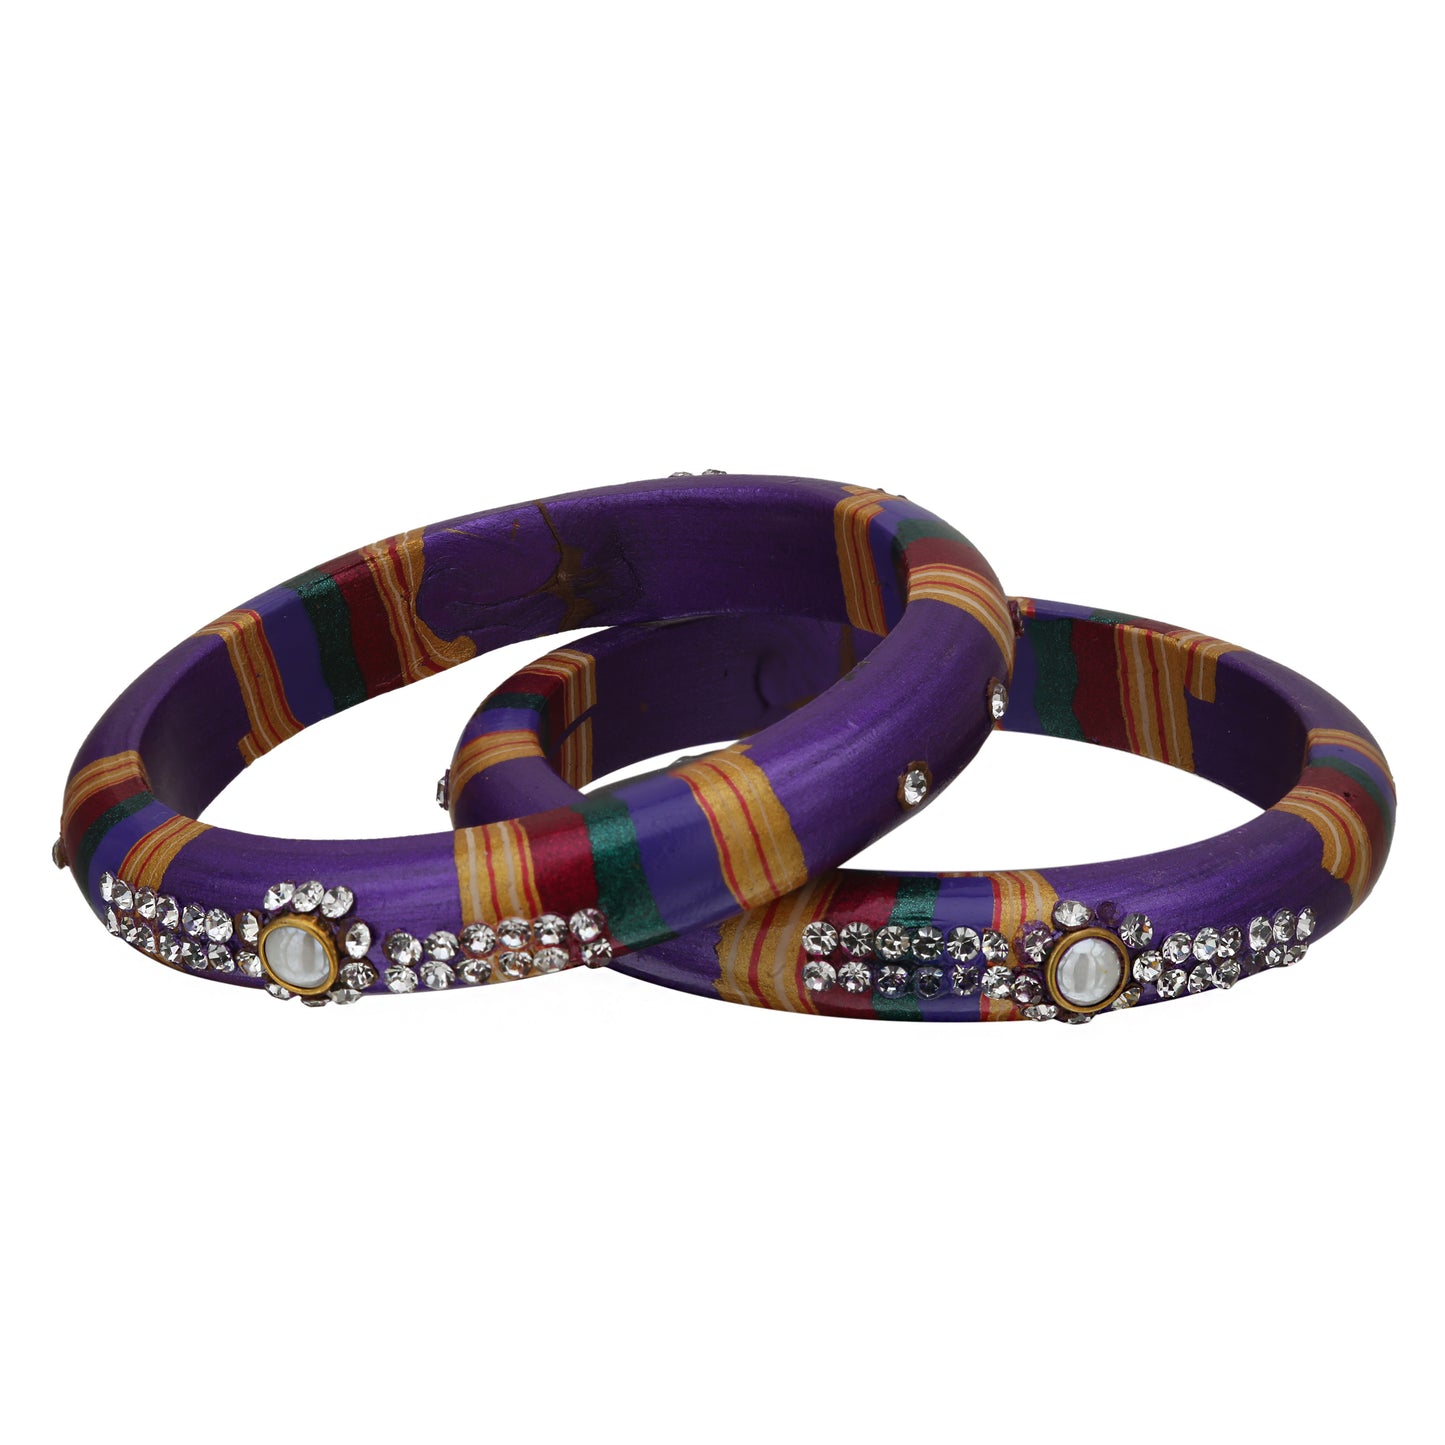 sukriti rajasthani traditional laharia purple lac kadaa bangles for women – set of 2